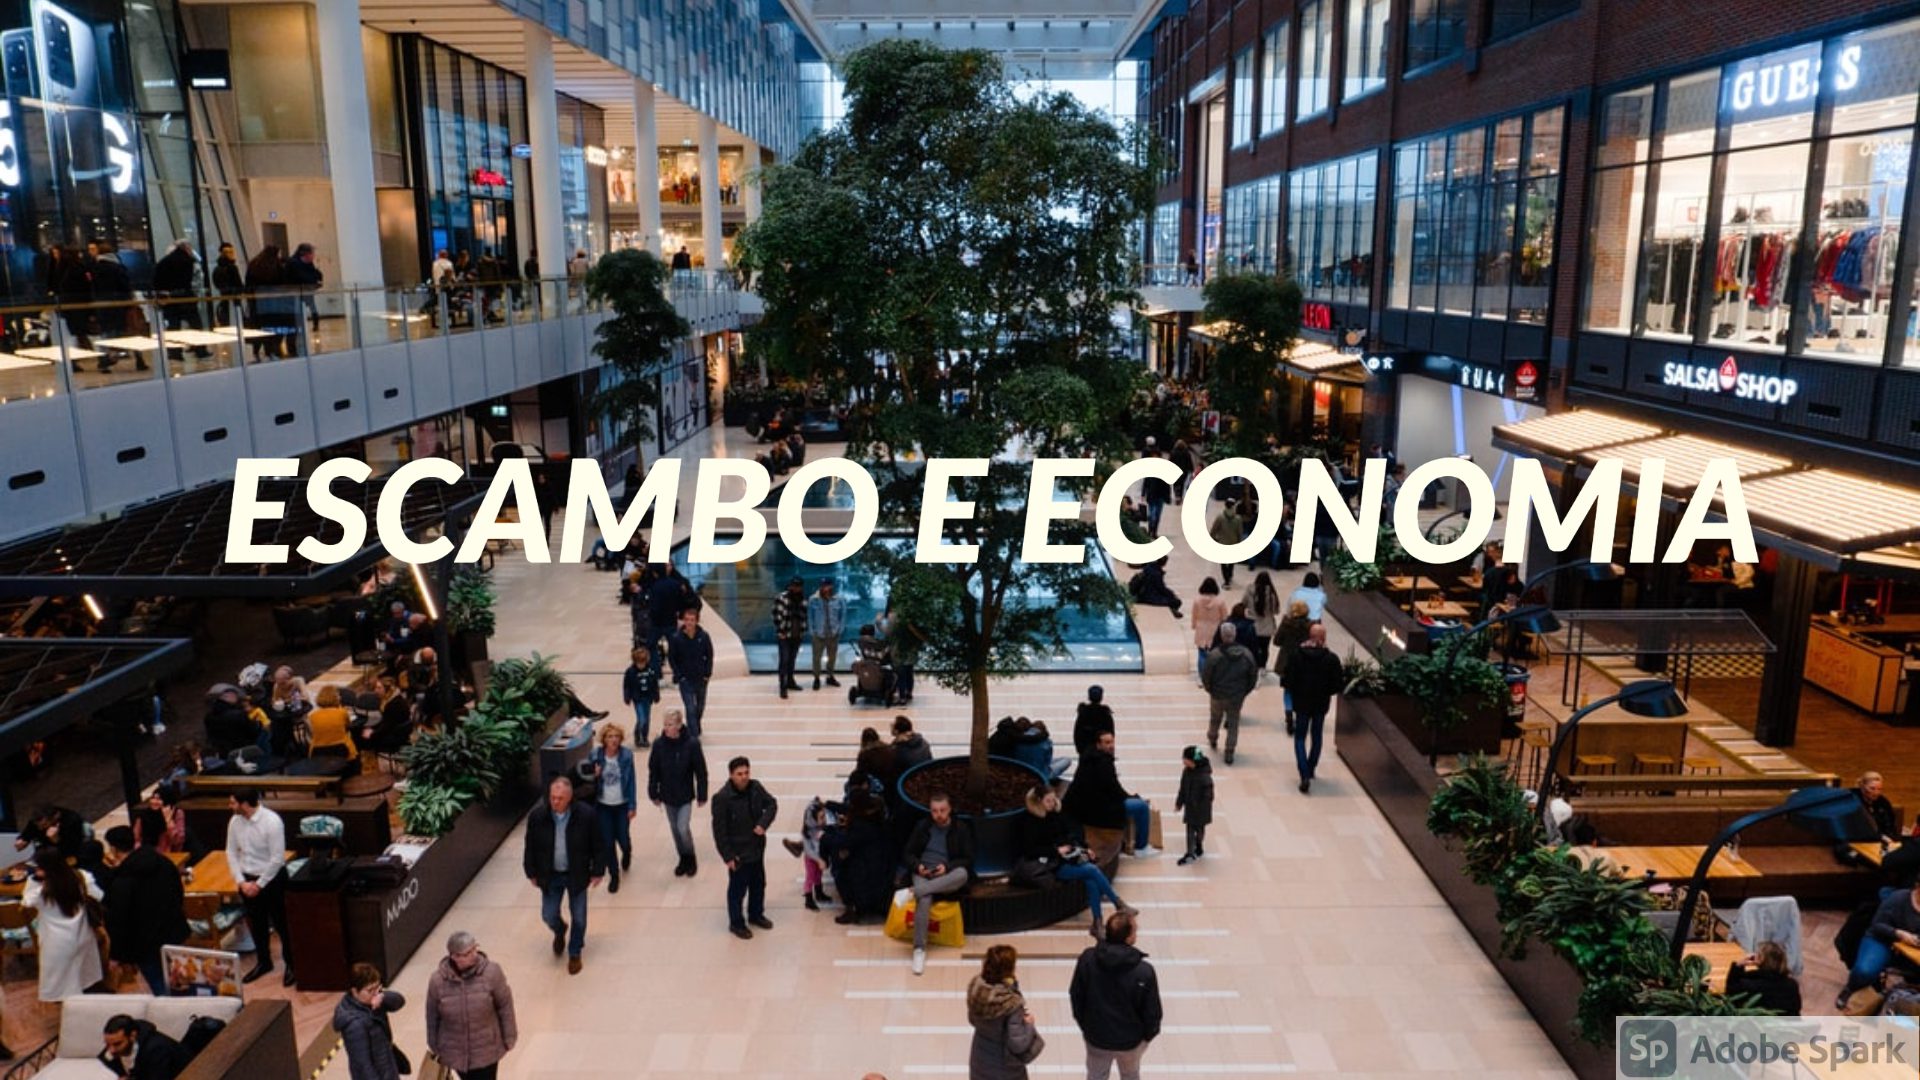 You are currently viewing Escambo e Economia